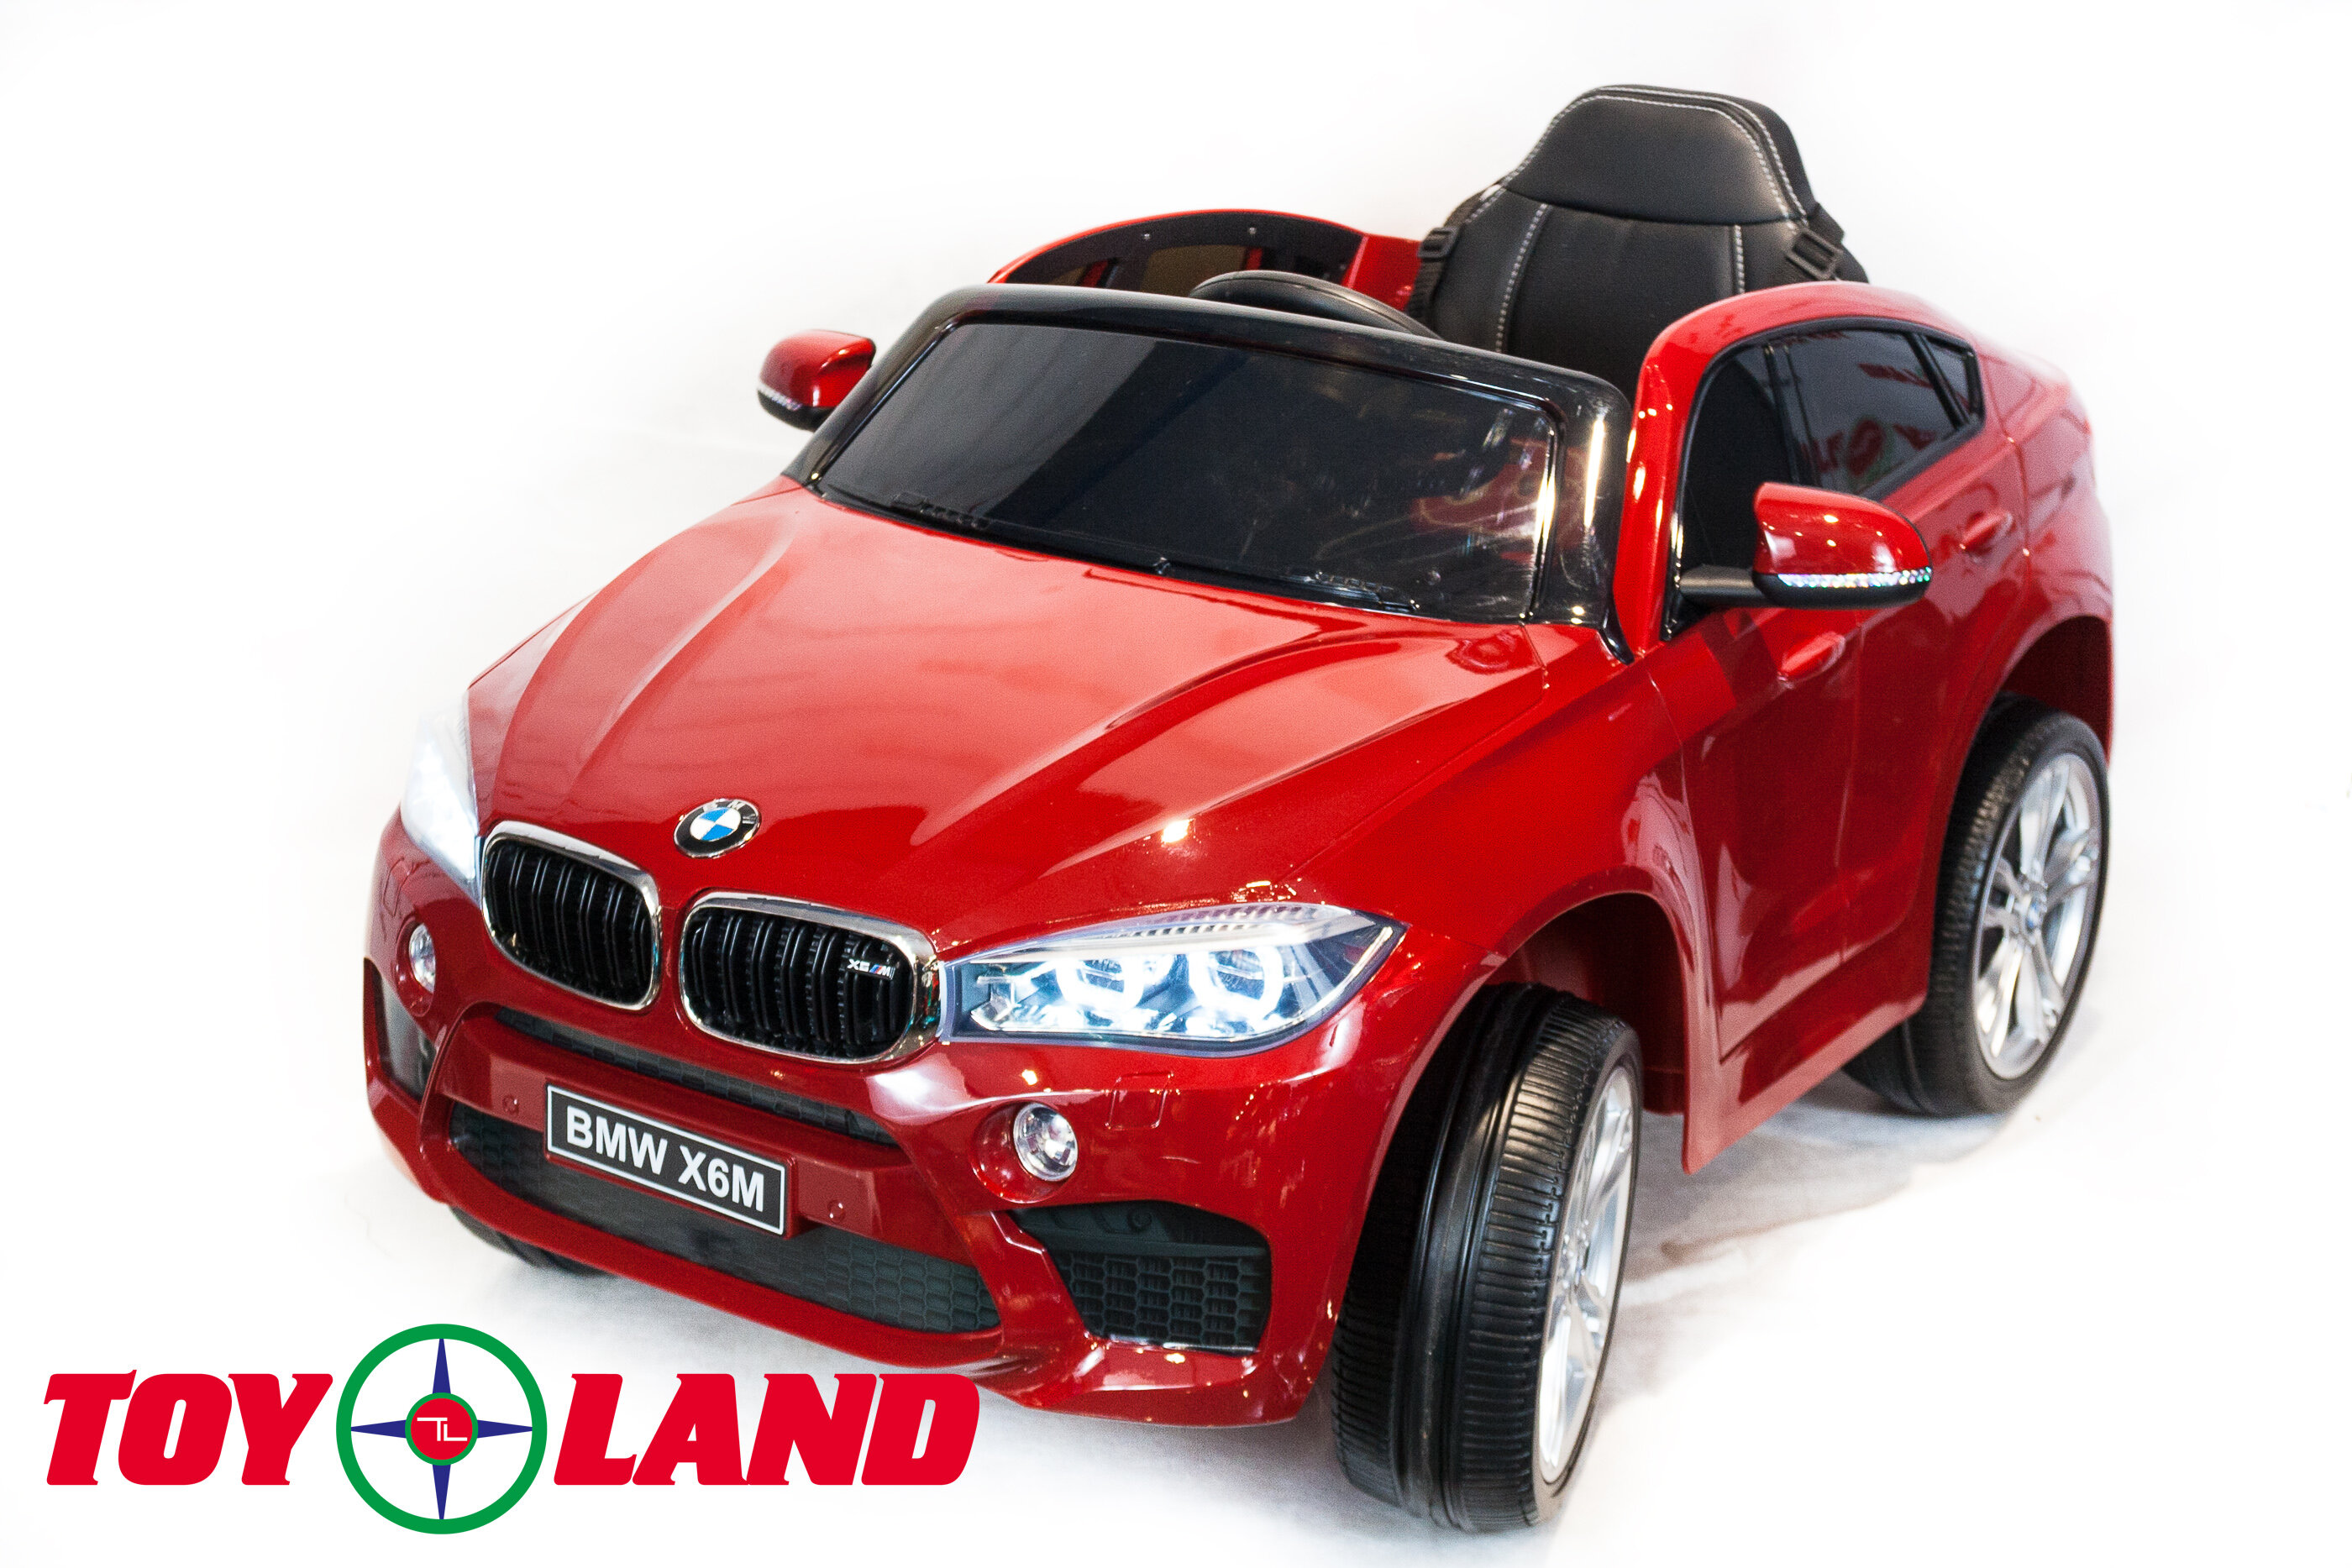   Toyland BMW X6M mini 